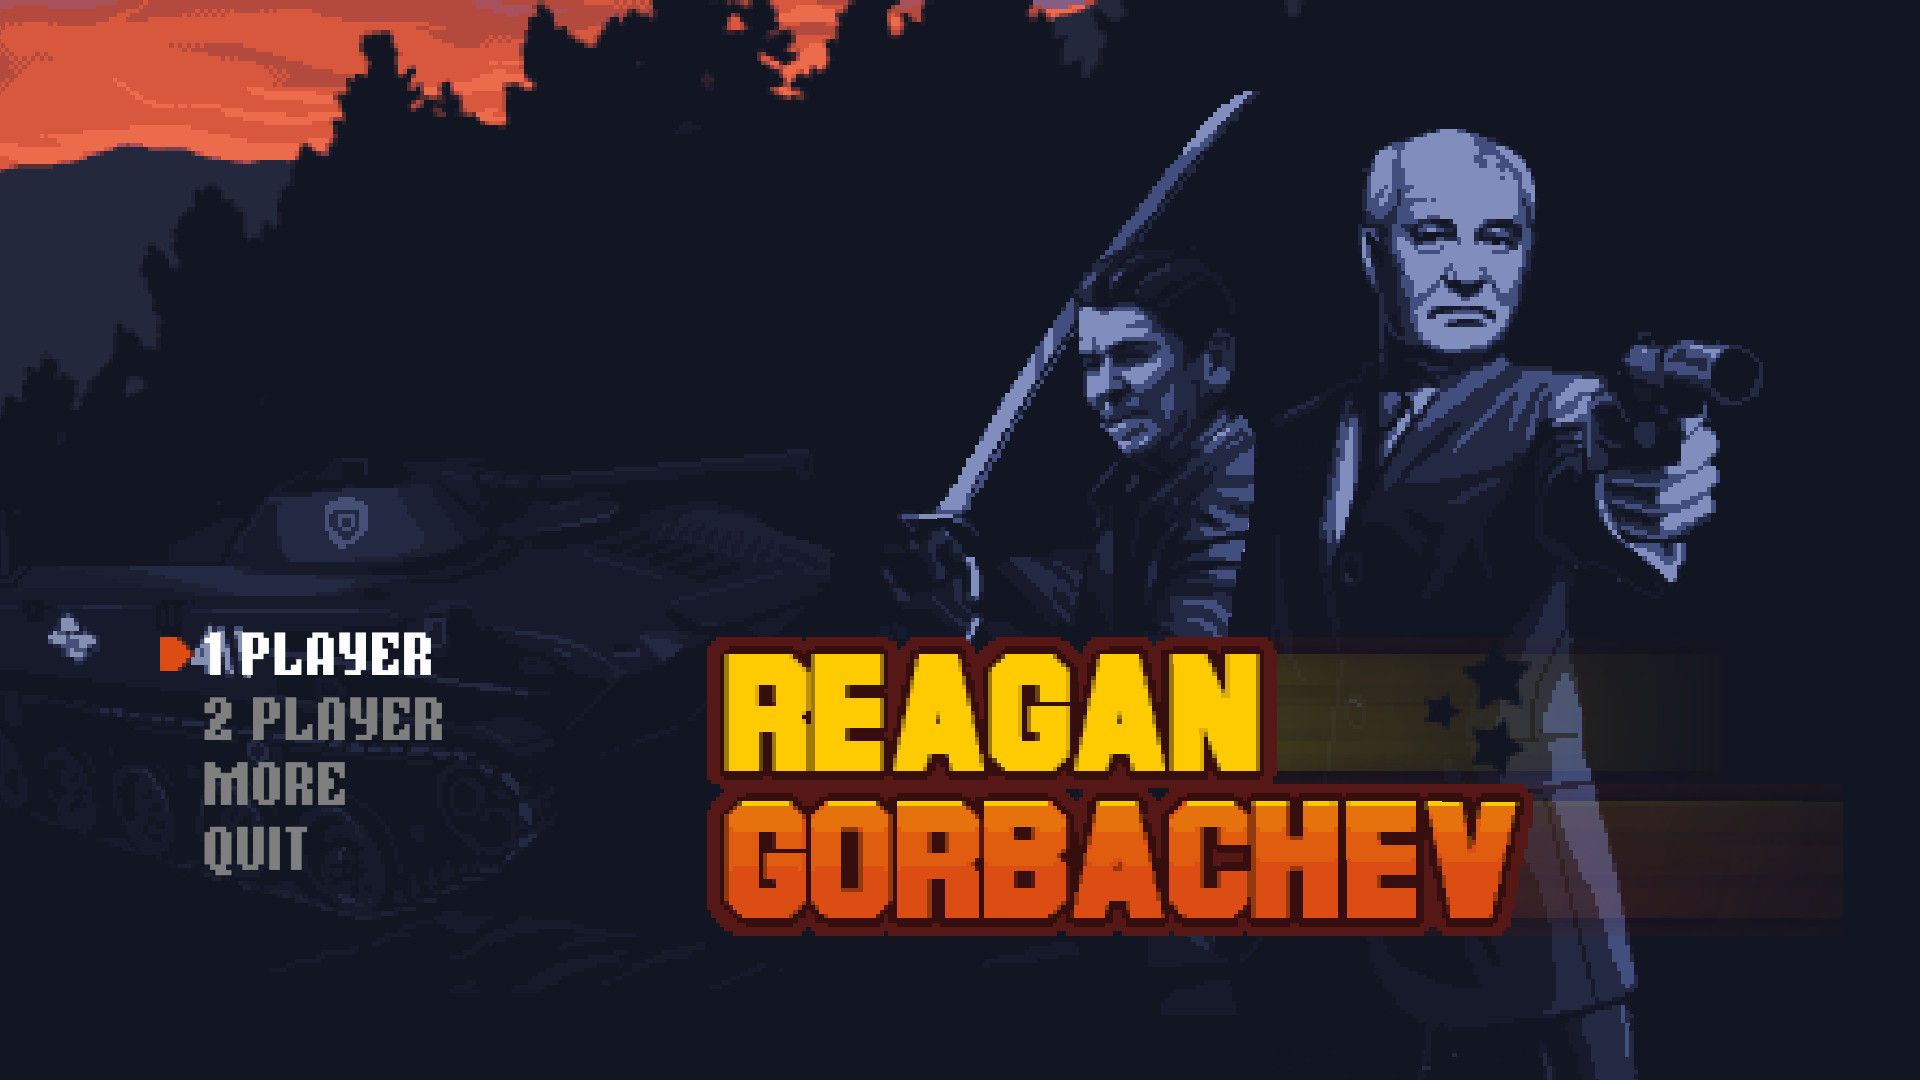 Reagan Gorbachev screenshot 6146